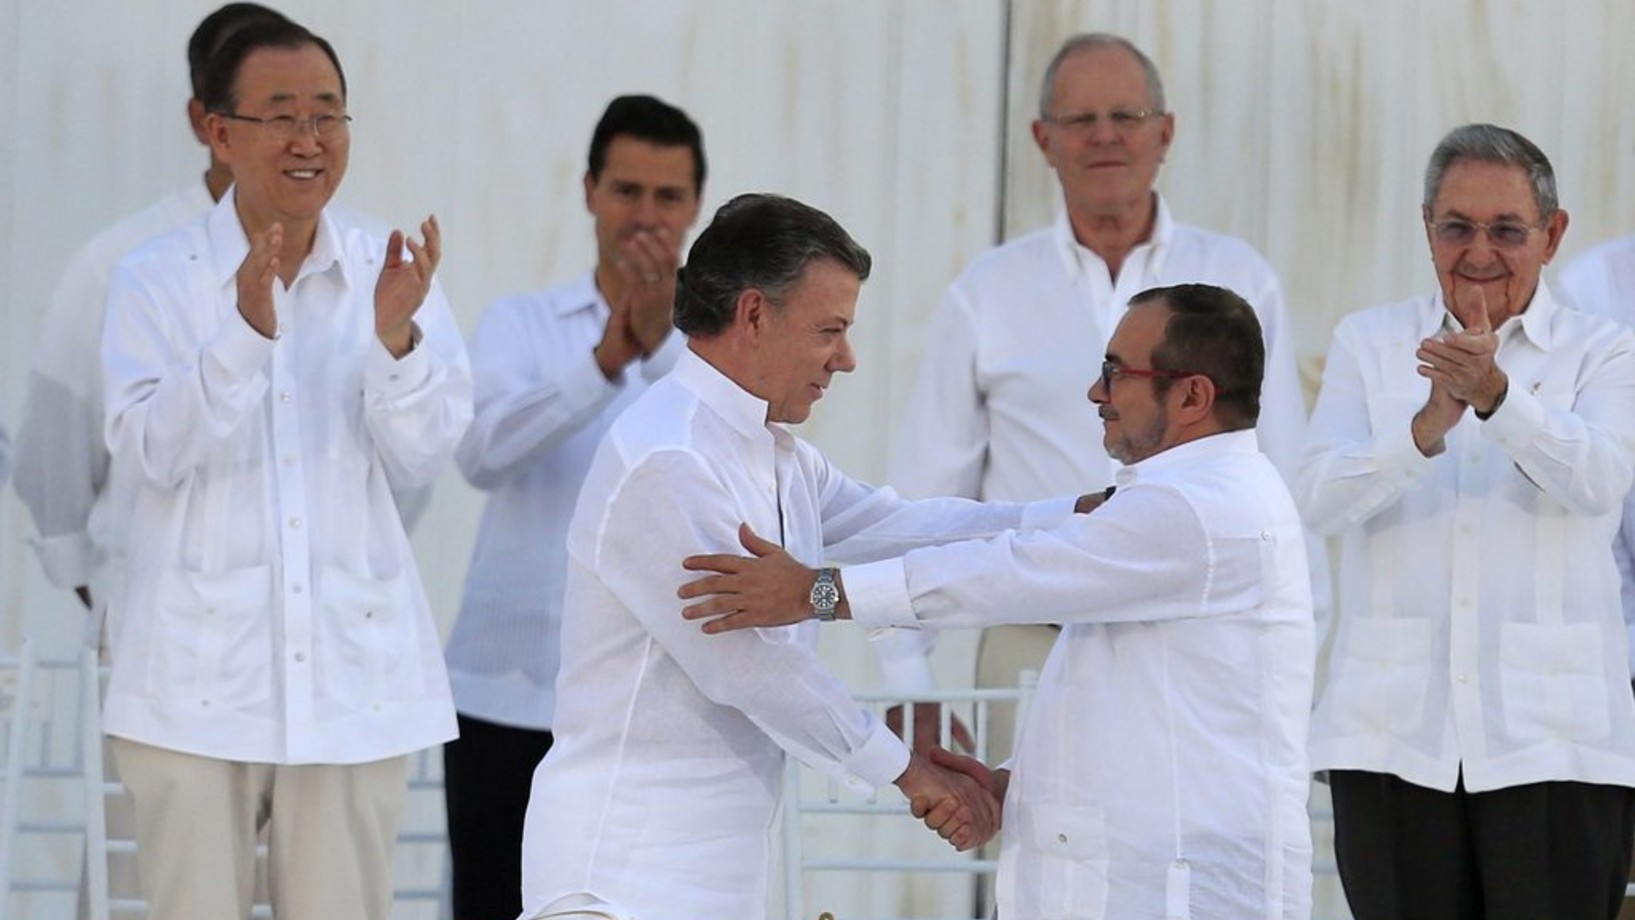 Der kolumbianische Präsident Juan Manuel Santos (vorne links) und Guerillaführer "Timochenko". Links Ban Ki-Moon, rechts Raúl Castro (Foto: Keystone/EPA/Mauricio Duenas Castaneda)

